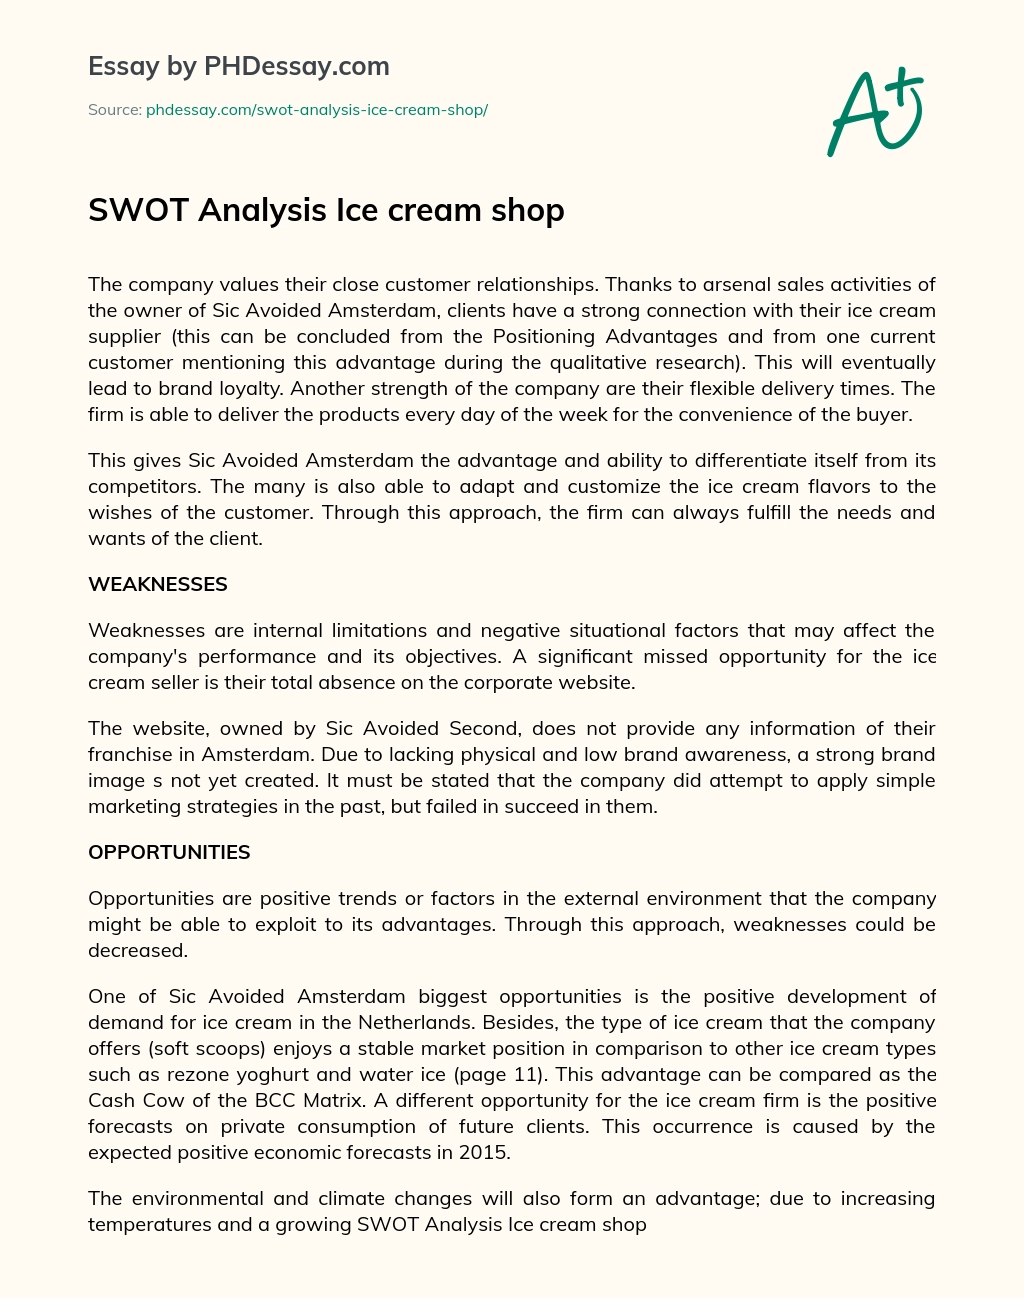 SWOT Analysis Ice cream shop essay